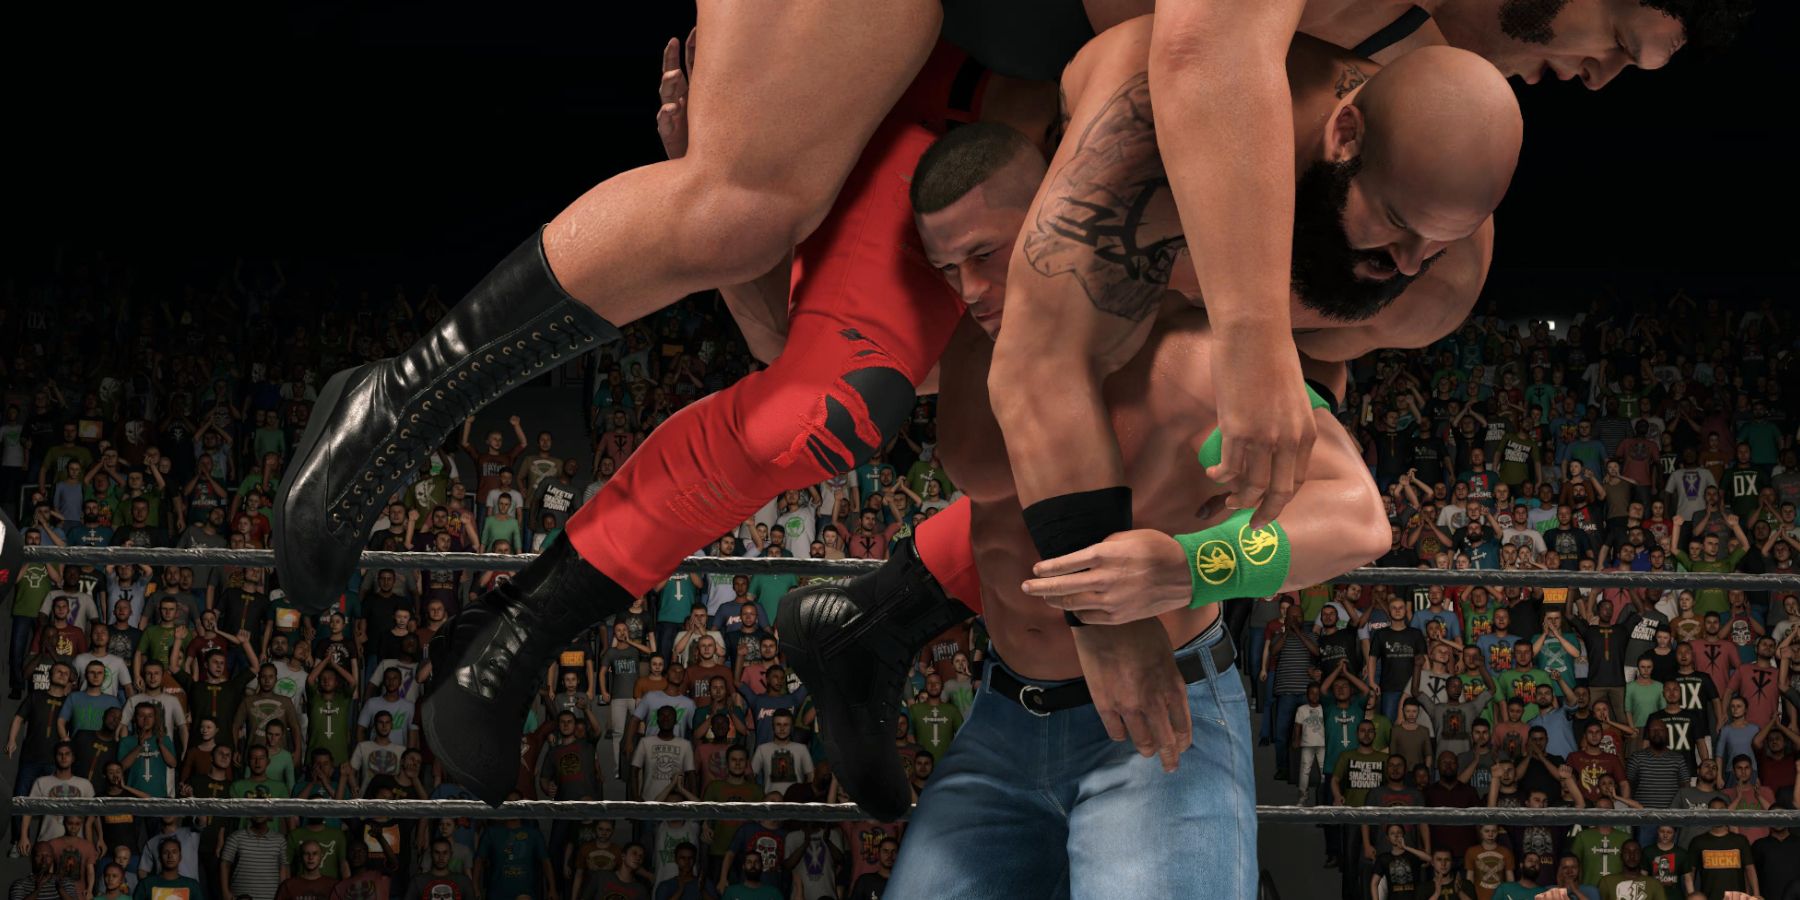 John Cena hitting the Double AA on the two super heavyweights